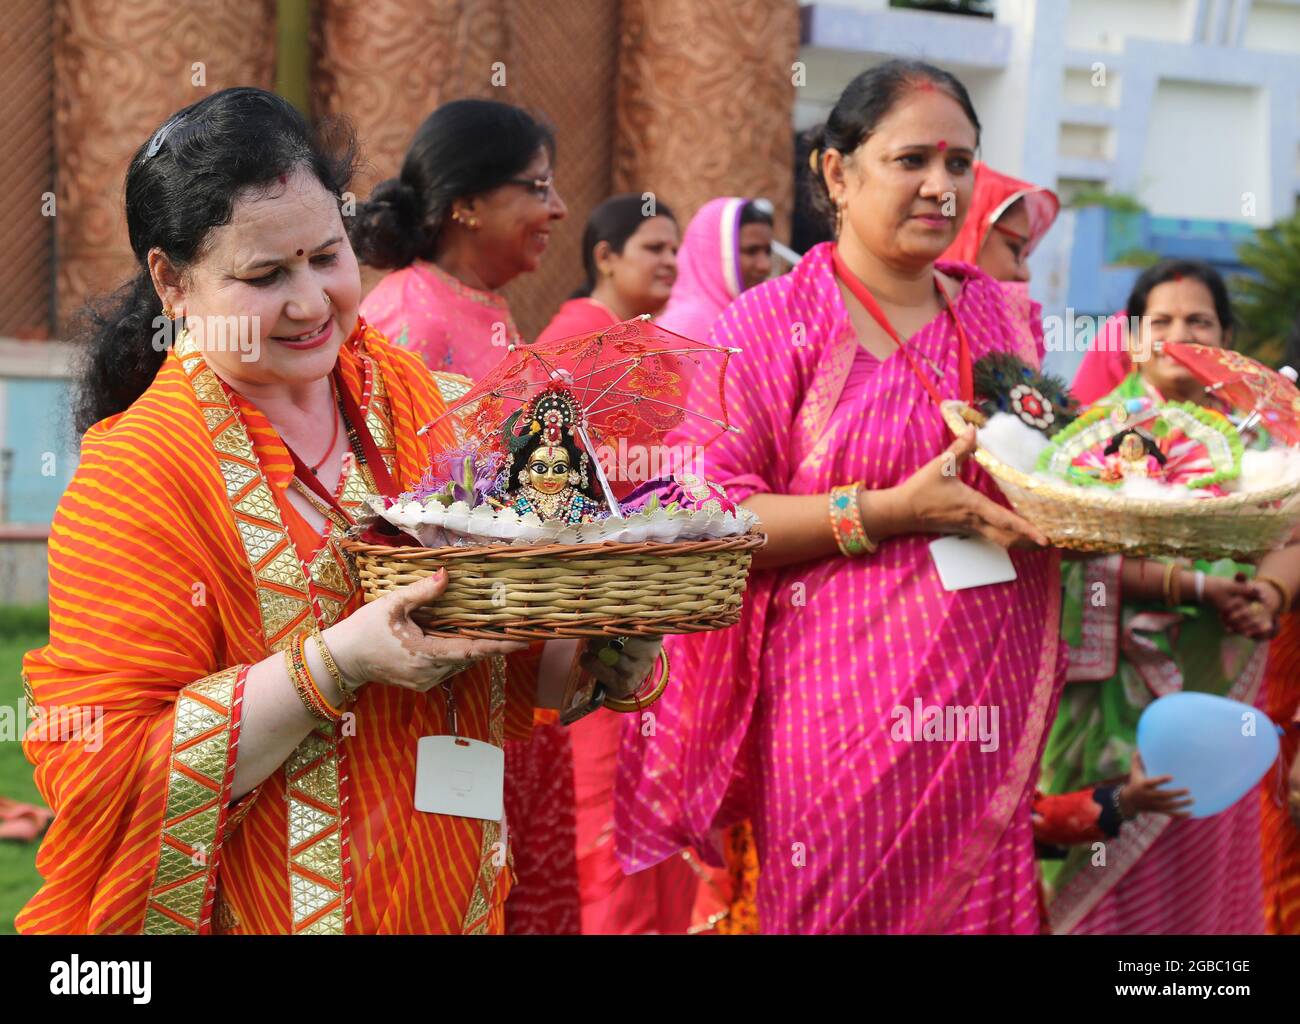 Beawar, Rajasthan, India, August 2, 2021: Hindu women wearing colorful lahariya saree, carrying the idols of Laddu Gopal (Lord Krishna) as they celebrate the holy month of Sawan (Shravan) in Beawar. Photo: Sumit Saraswat Stock Photo